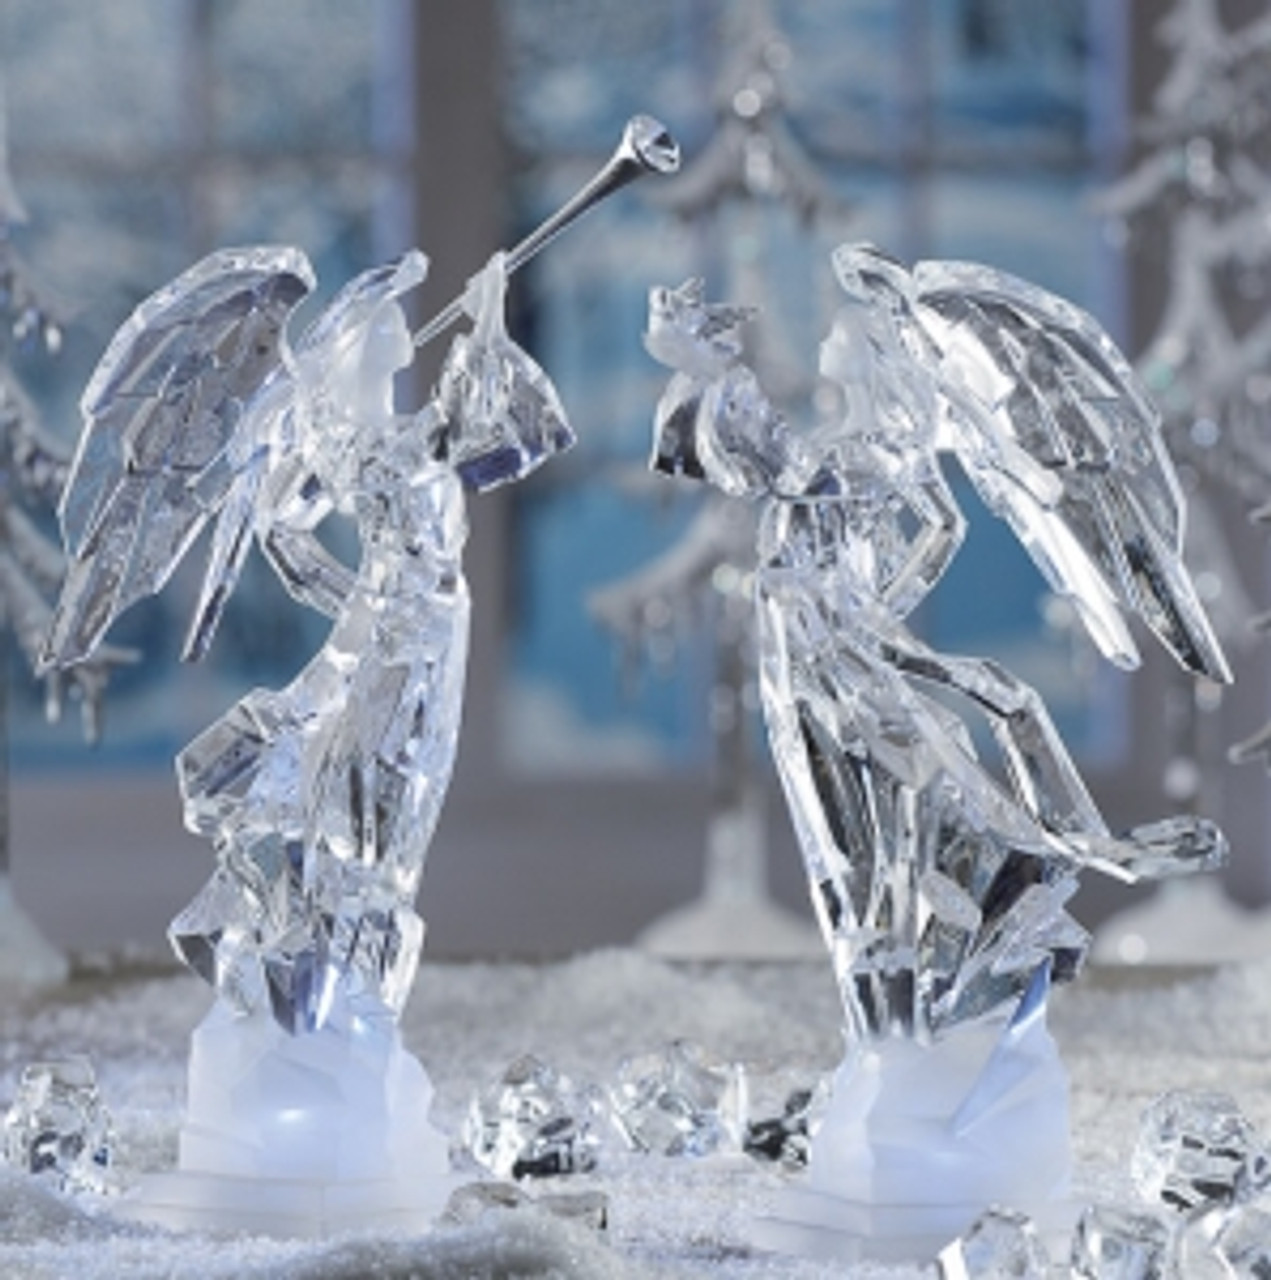 Contemporary Metallic Angel Set: Christmas Angel Figurine Decorations Set  of TwoPlatt Designs